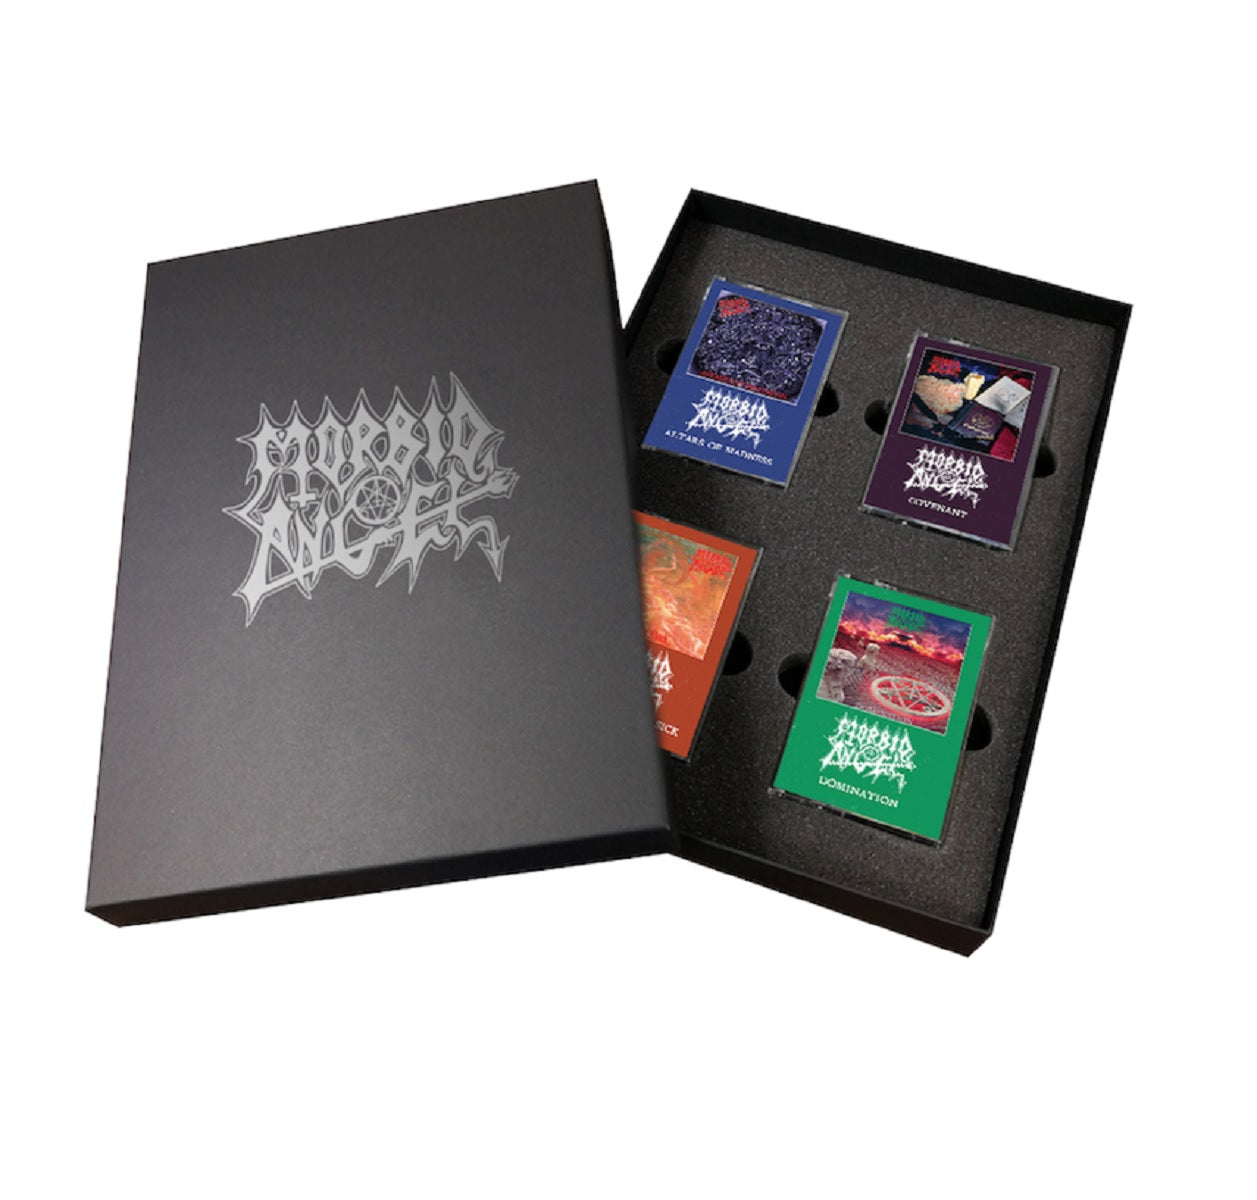 Morbid Angel "ABCD" Cassette Tape Collector's Box